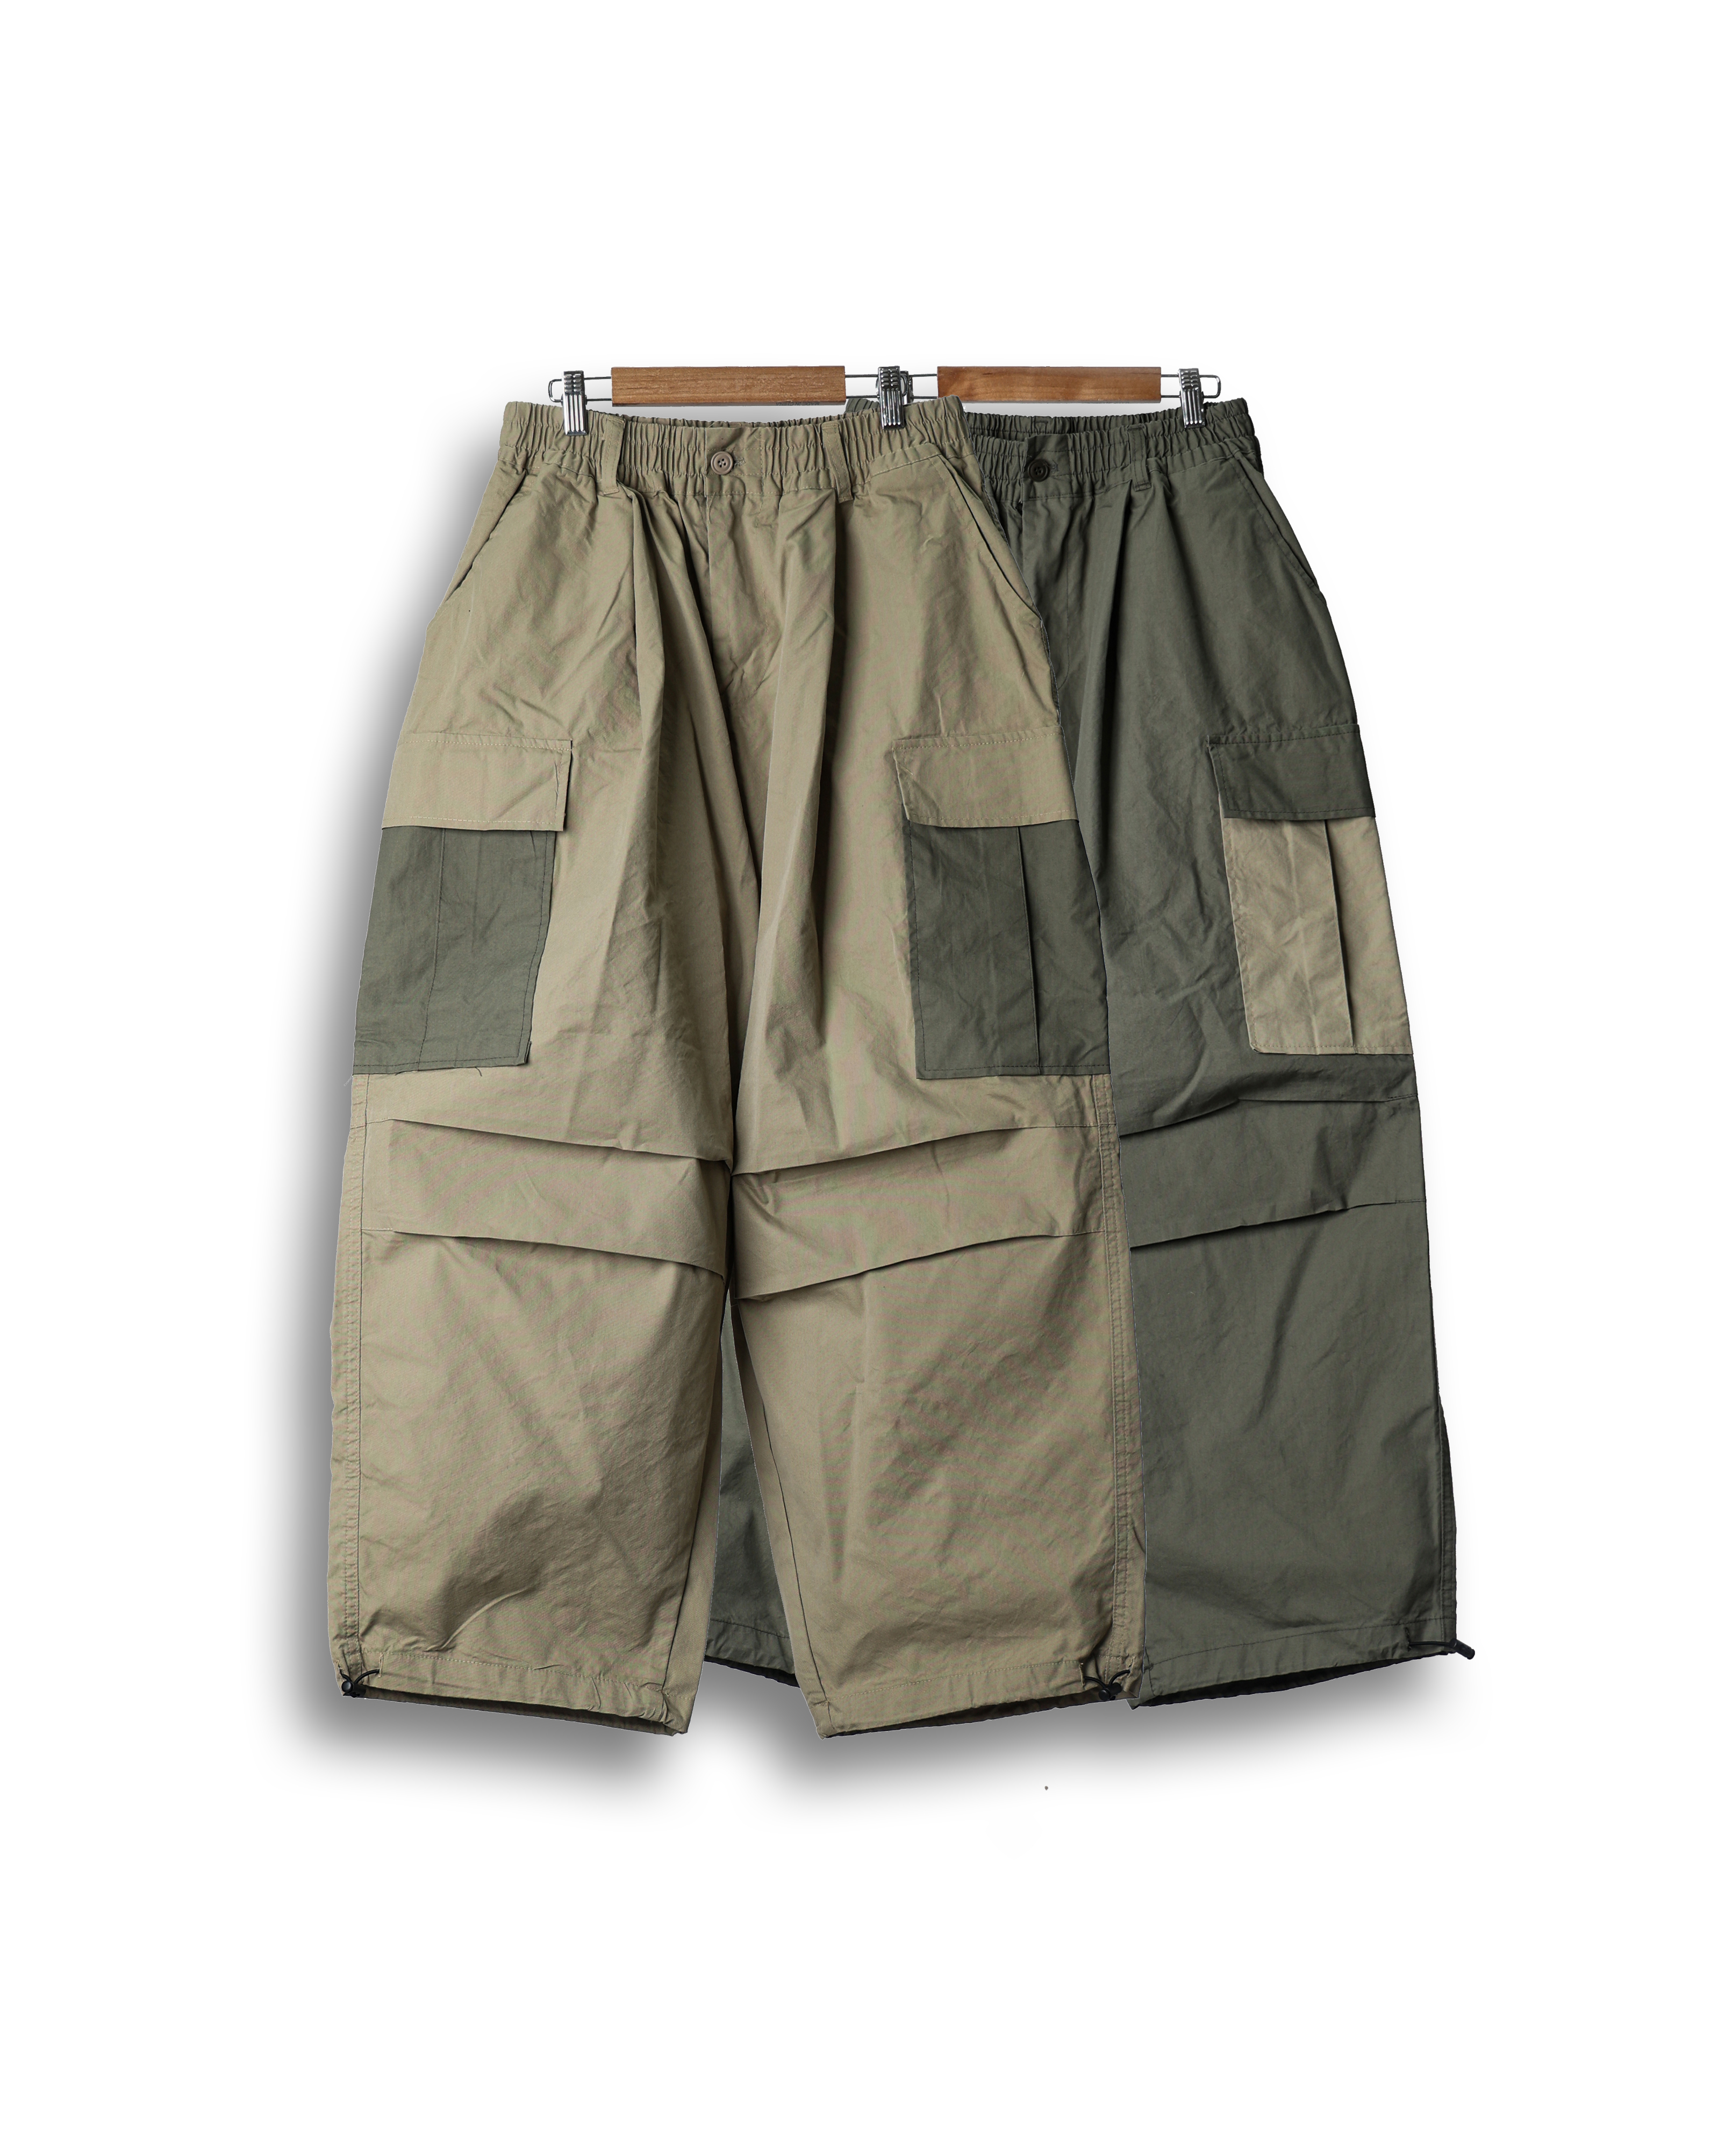 RARA Coloration Pocket Mil Field Pants (Khaki/Beige)